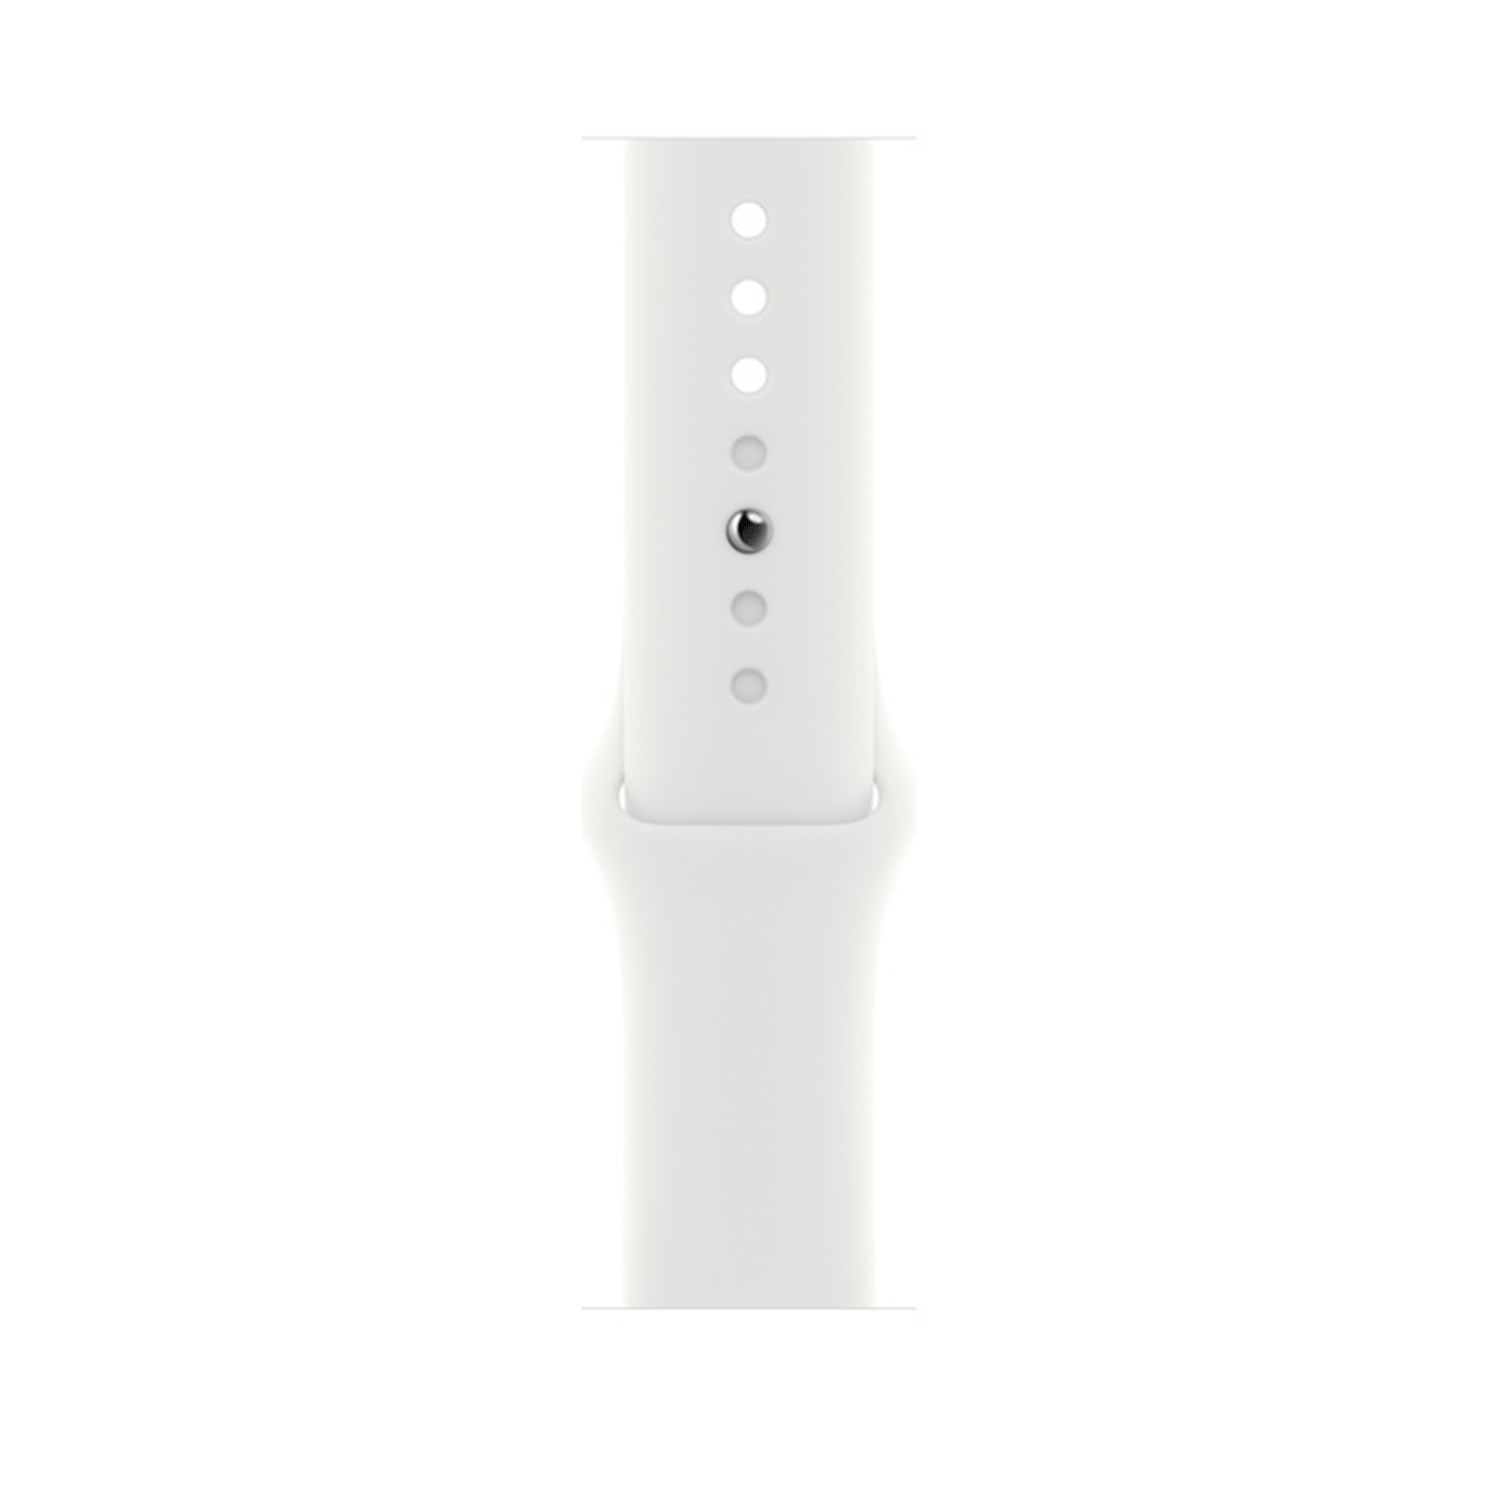 Apple Watch SE 2 MNTJ3LL/A Caixa Alumínio 44mm Prata - Esportiva Branco M/L